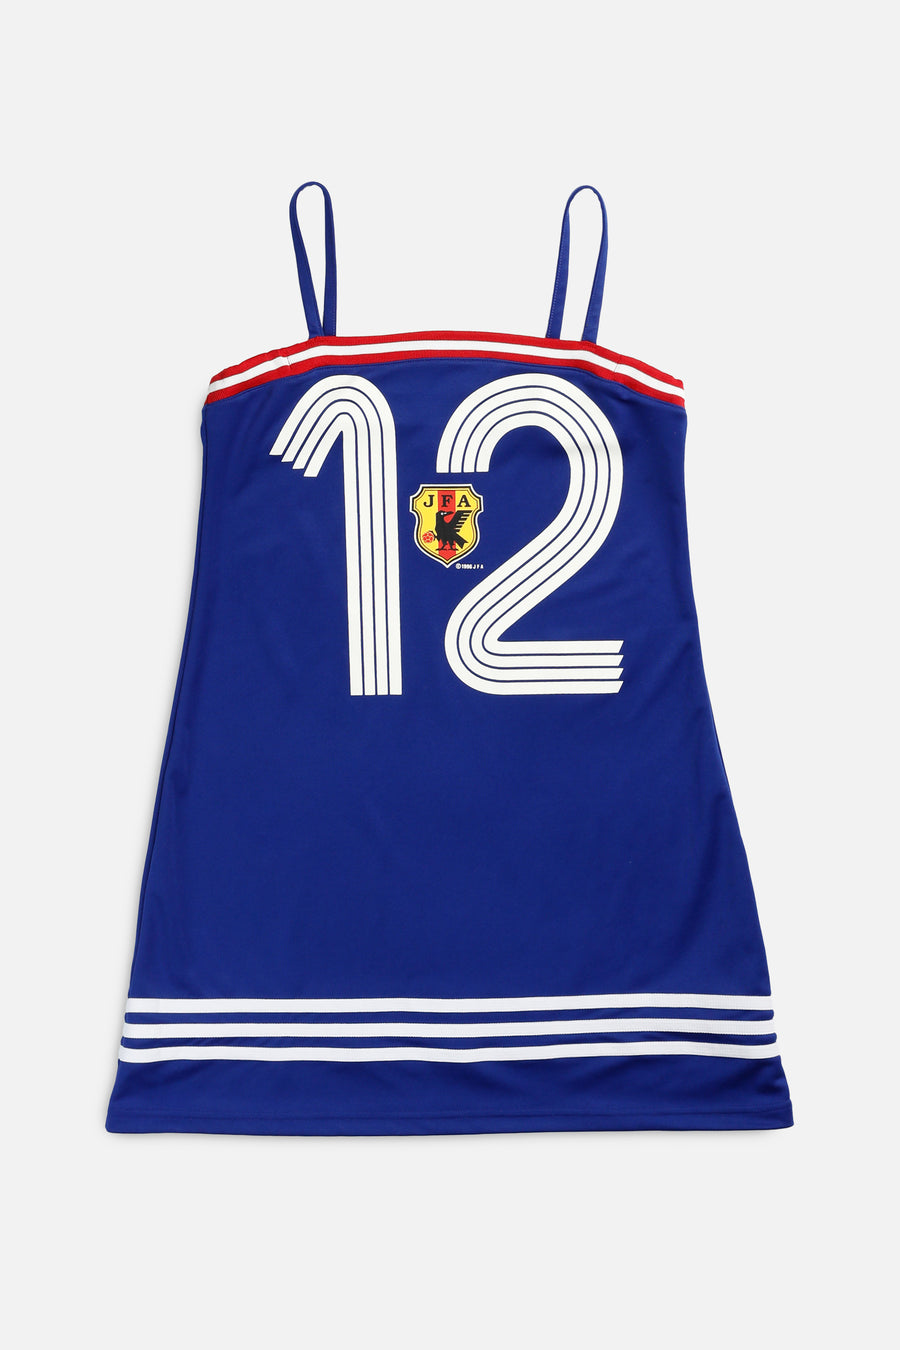 Vintage Adidas JFA Soccer Dress - M